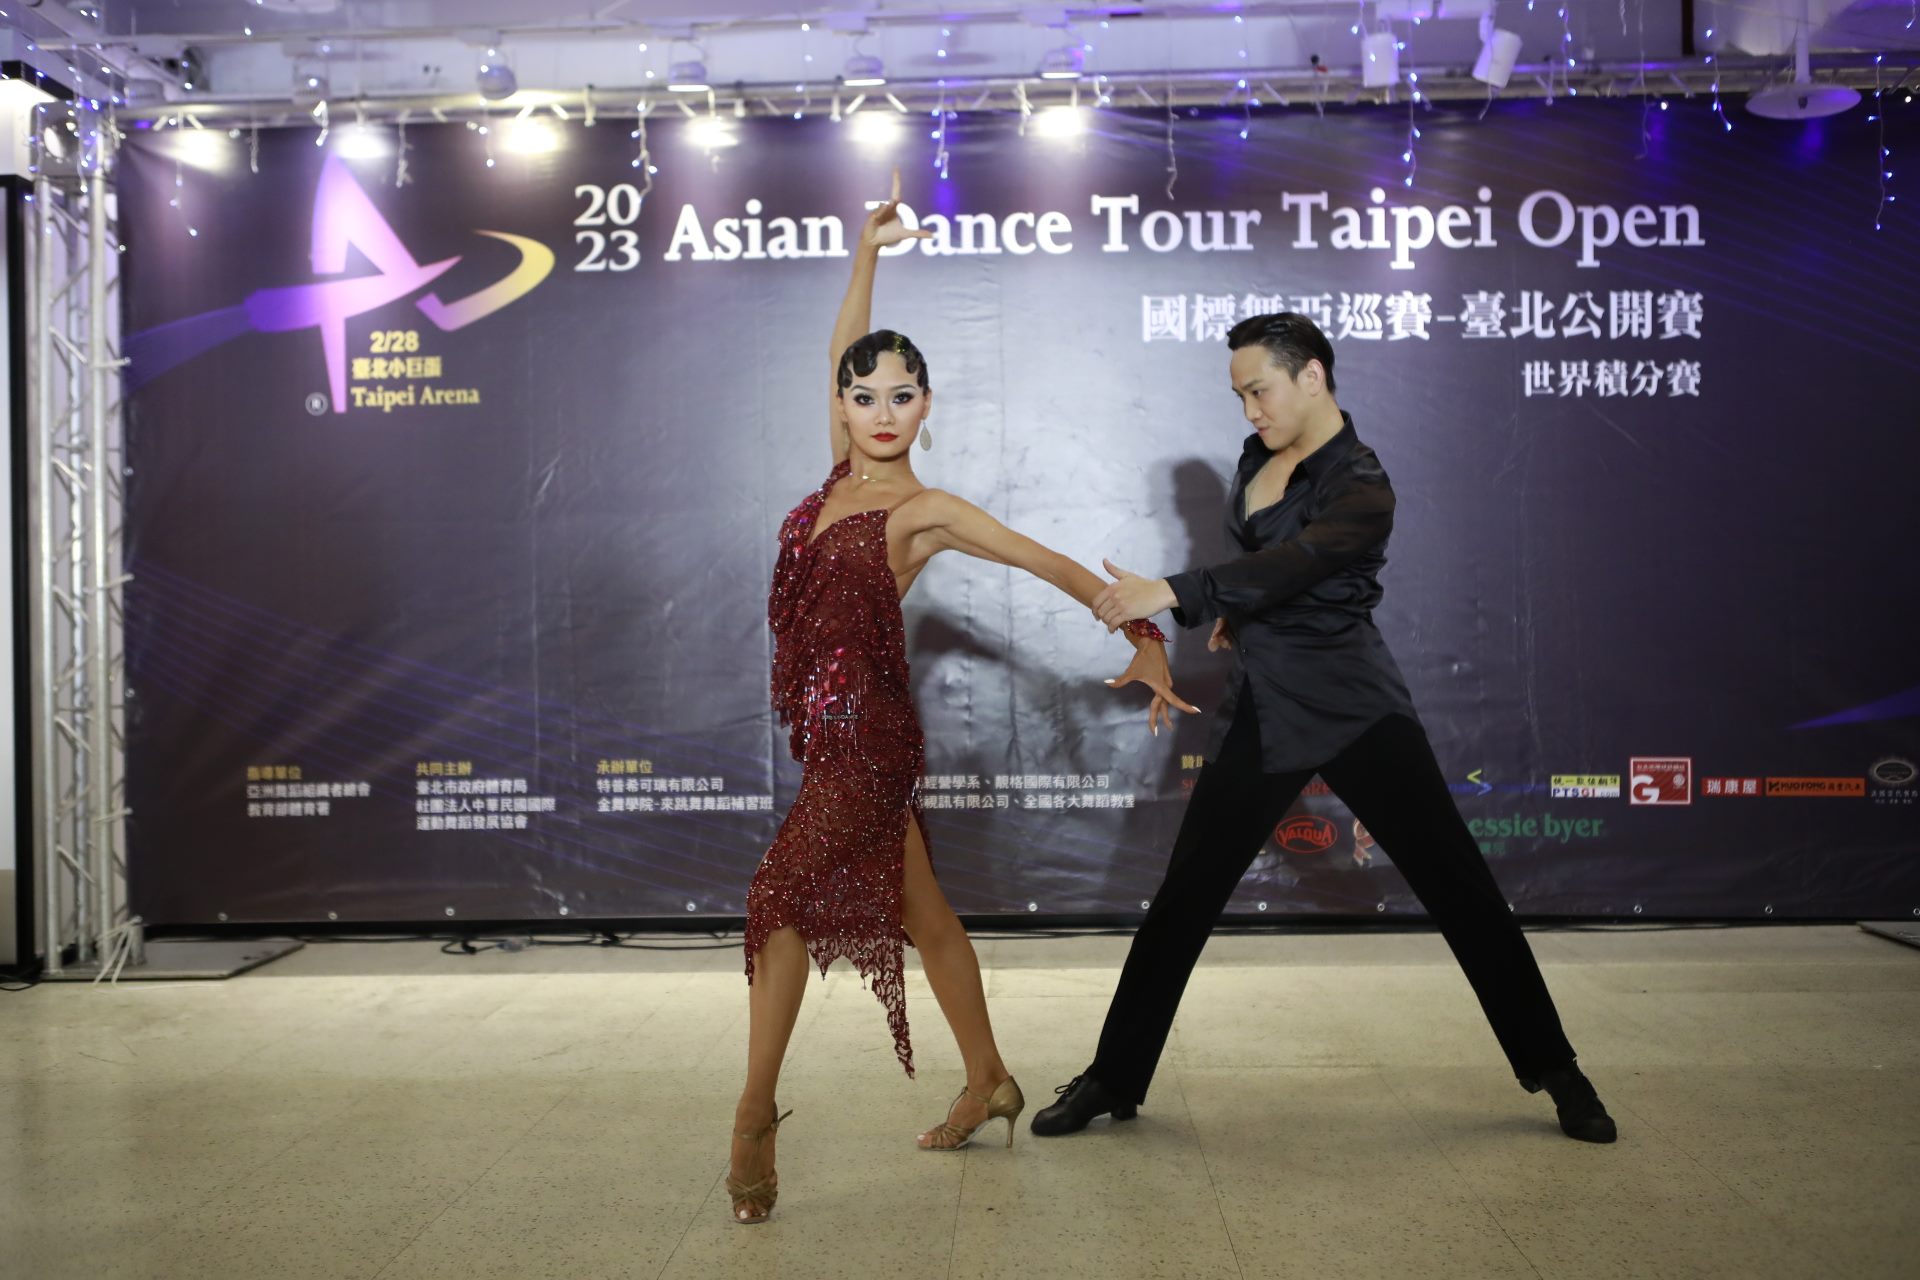 asian dance tour taipei open results